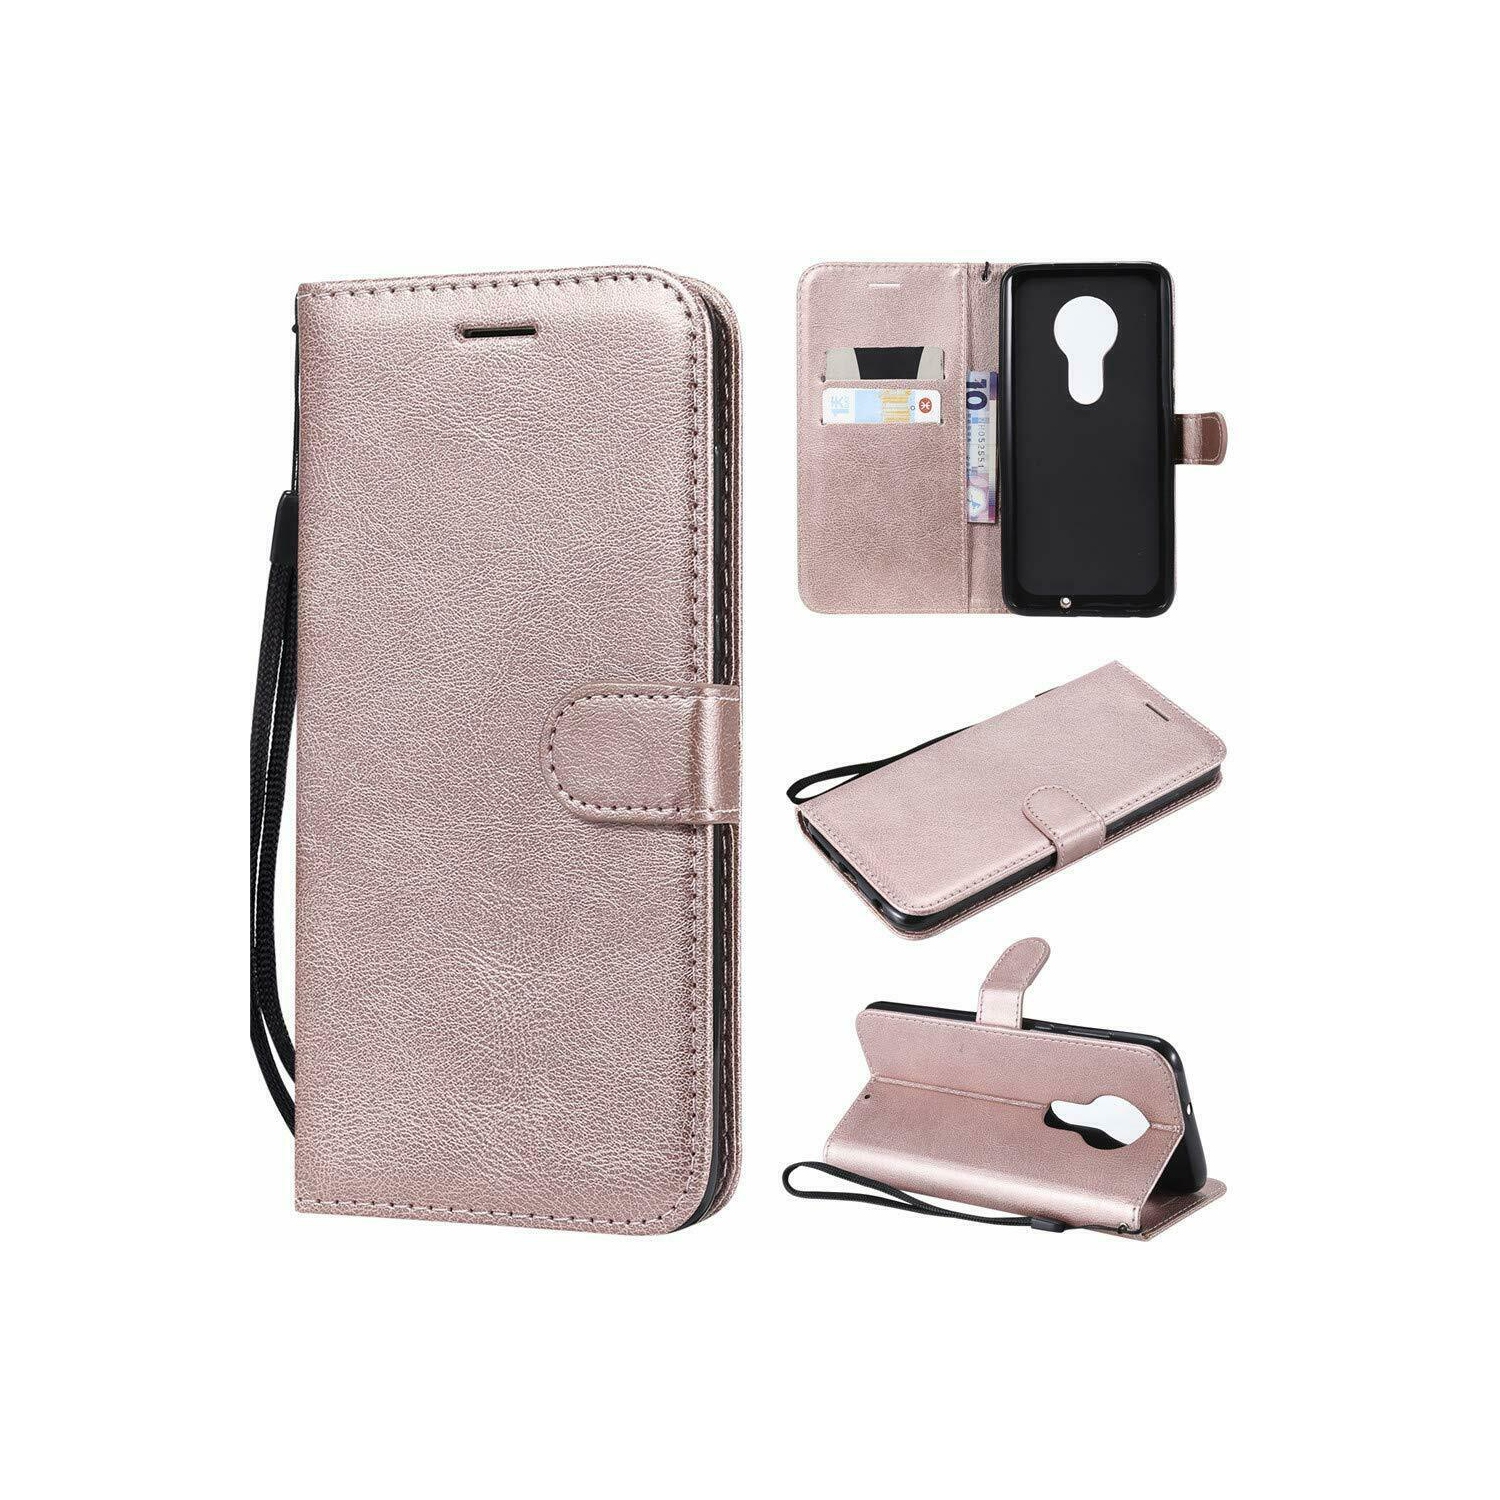 【CSmart】 Magnetic Card Slot Leather Folio Wallet Flip Case Cover for Motorola Moto G7 Power, Rose Gold